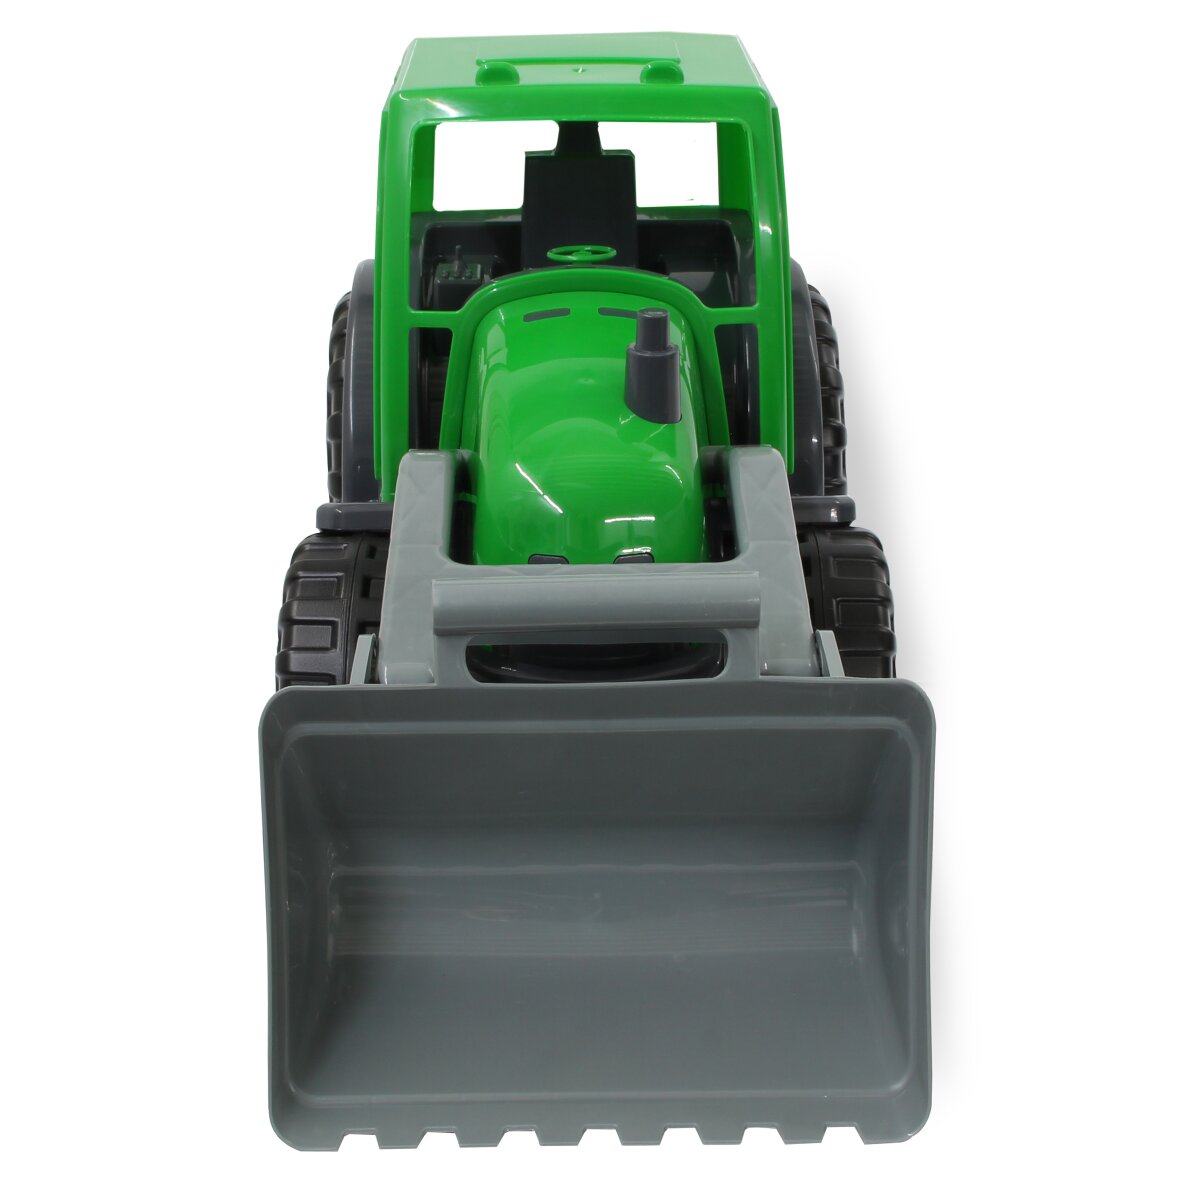 Traktor Power Loader XL mit Frontlader